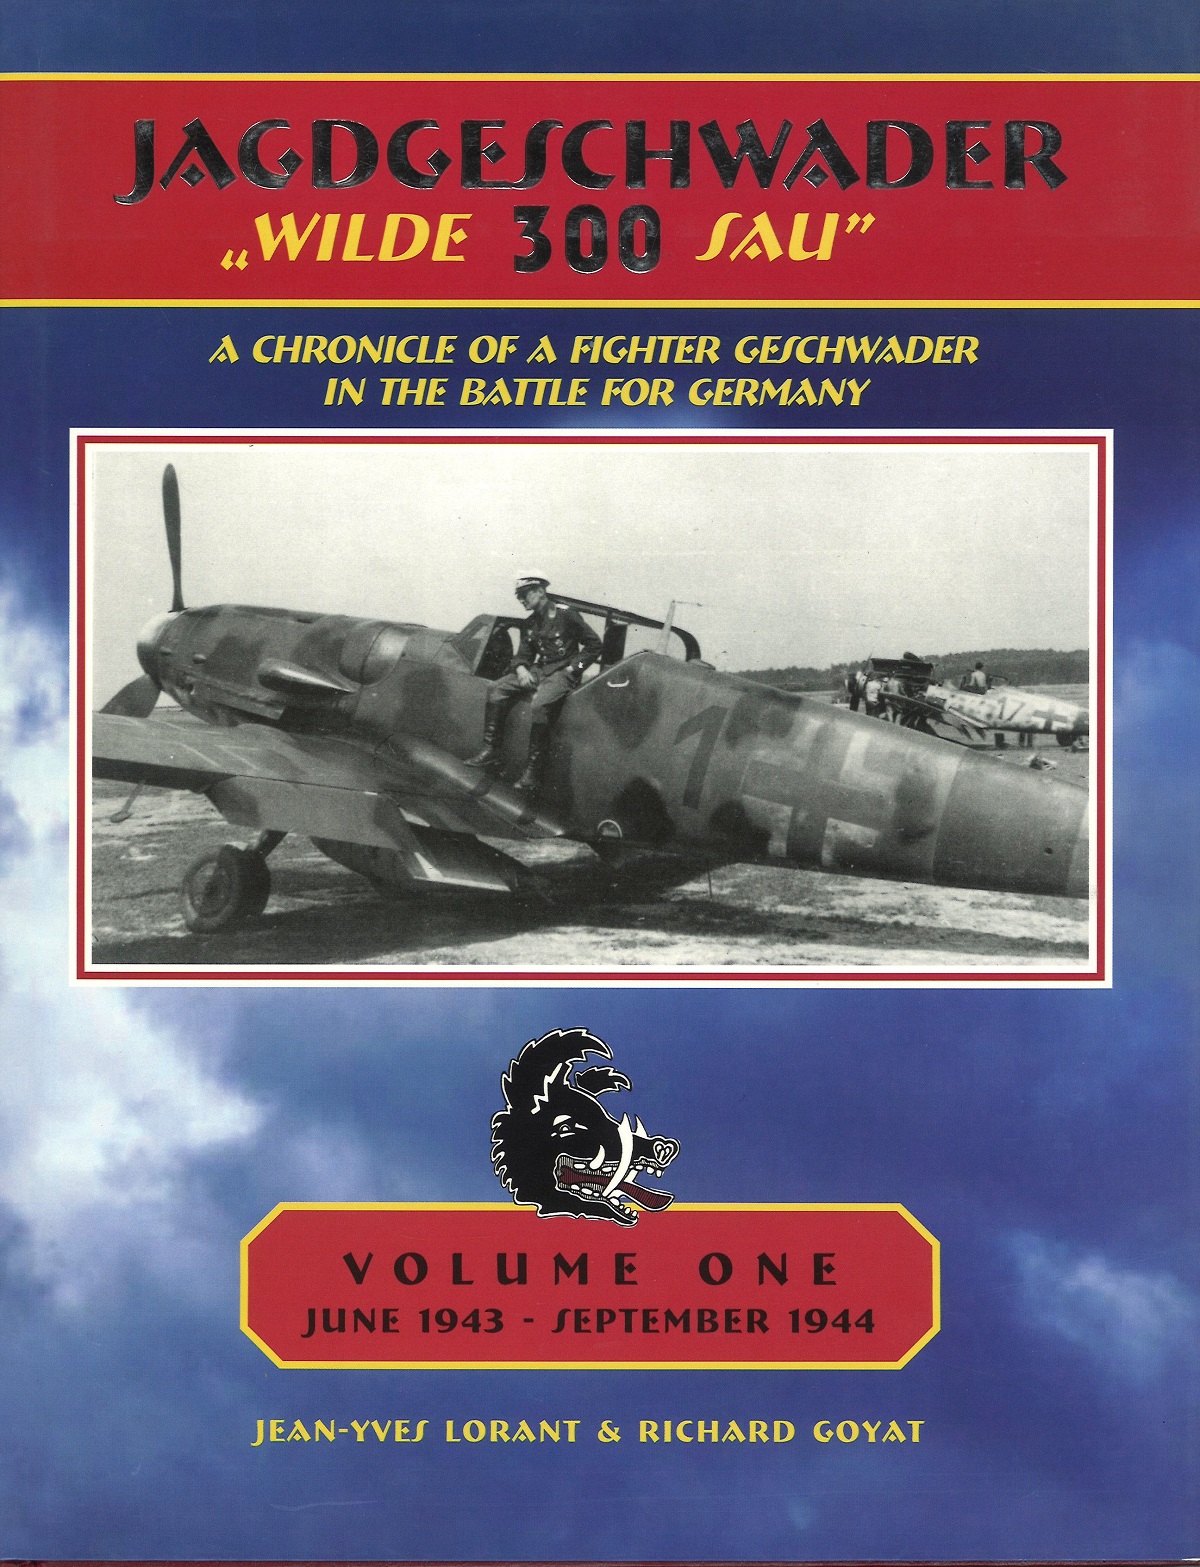 World War II Hajo Herrmann signed hardback book titled Jagdgeschwader Wilde 300 Sau A chronicle of a - Image 2 of 2